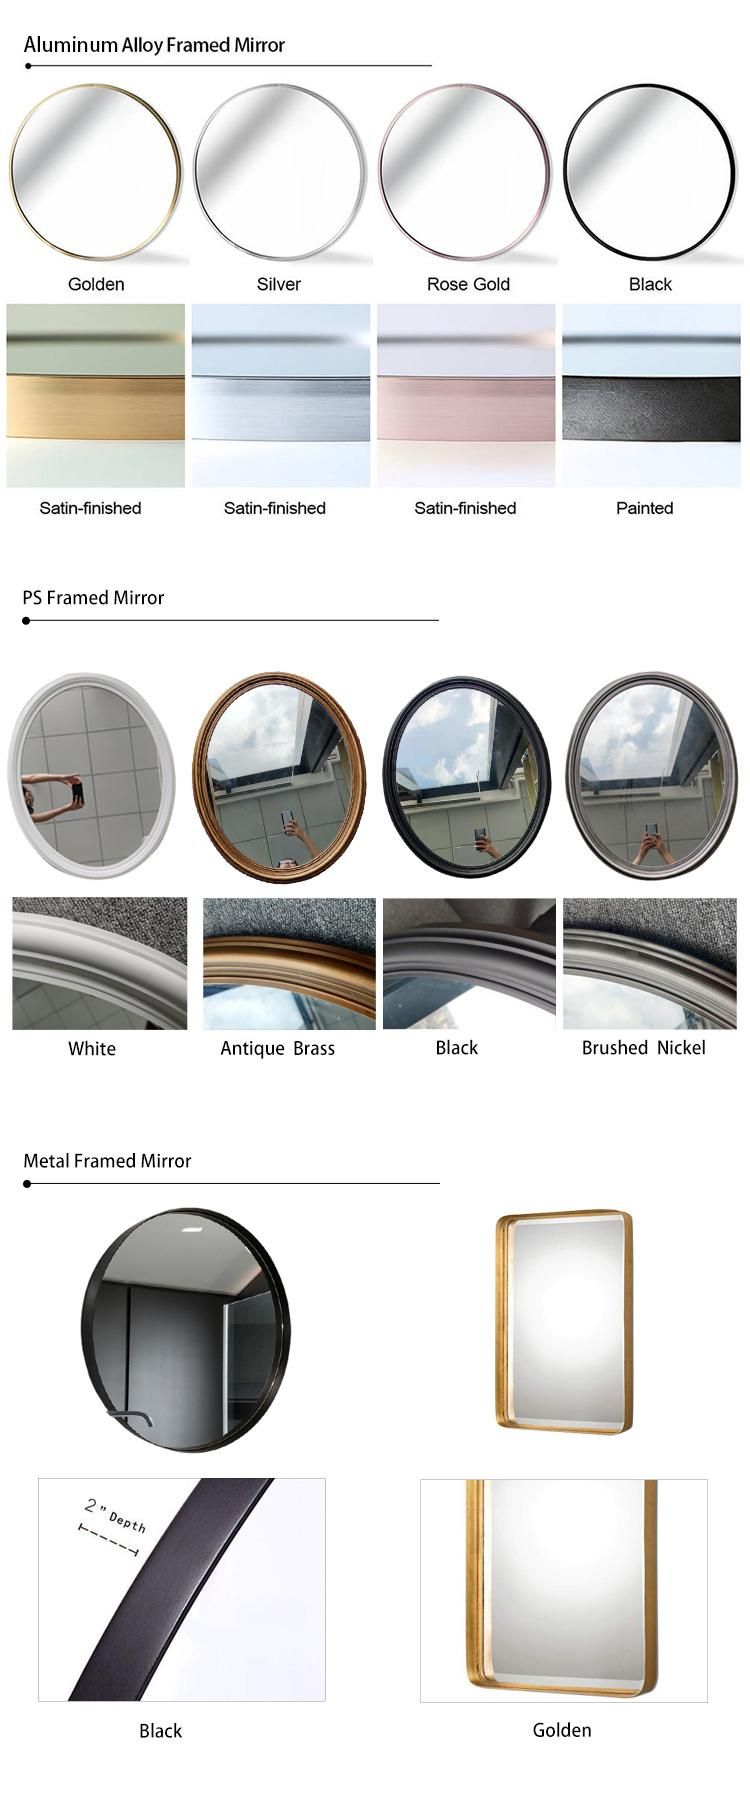 Factory Price 28 in X 28 in Matt Black Round Aluminum Alloy Framed Bathroom Vanity Mirror